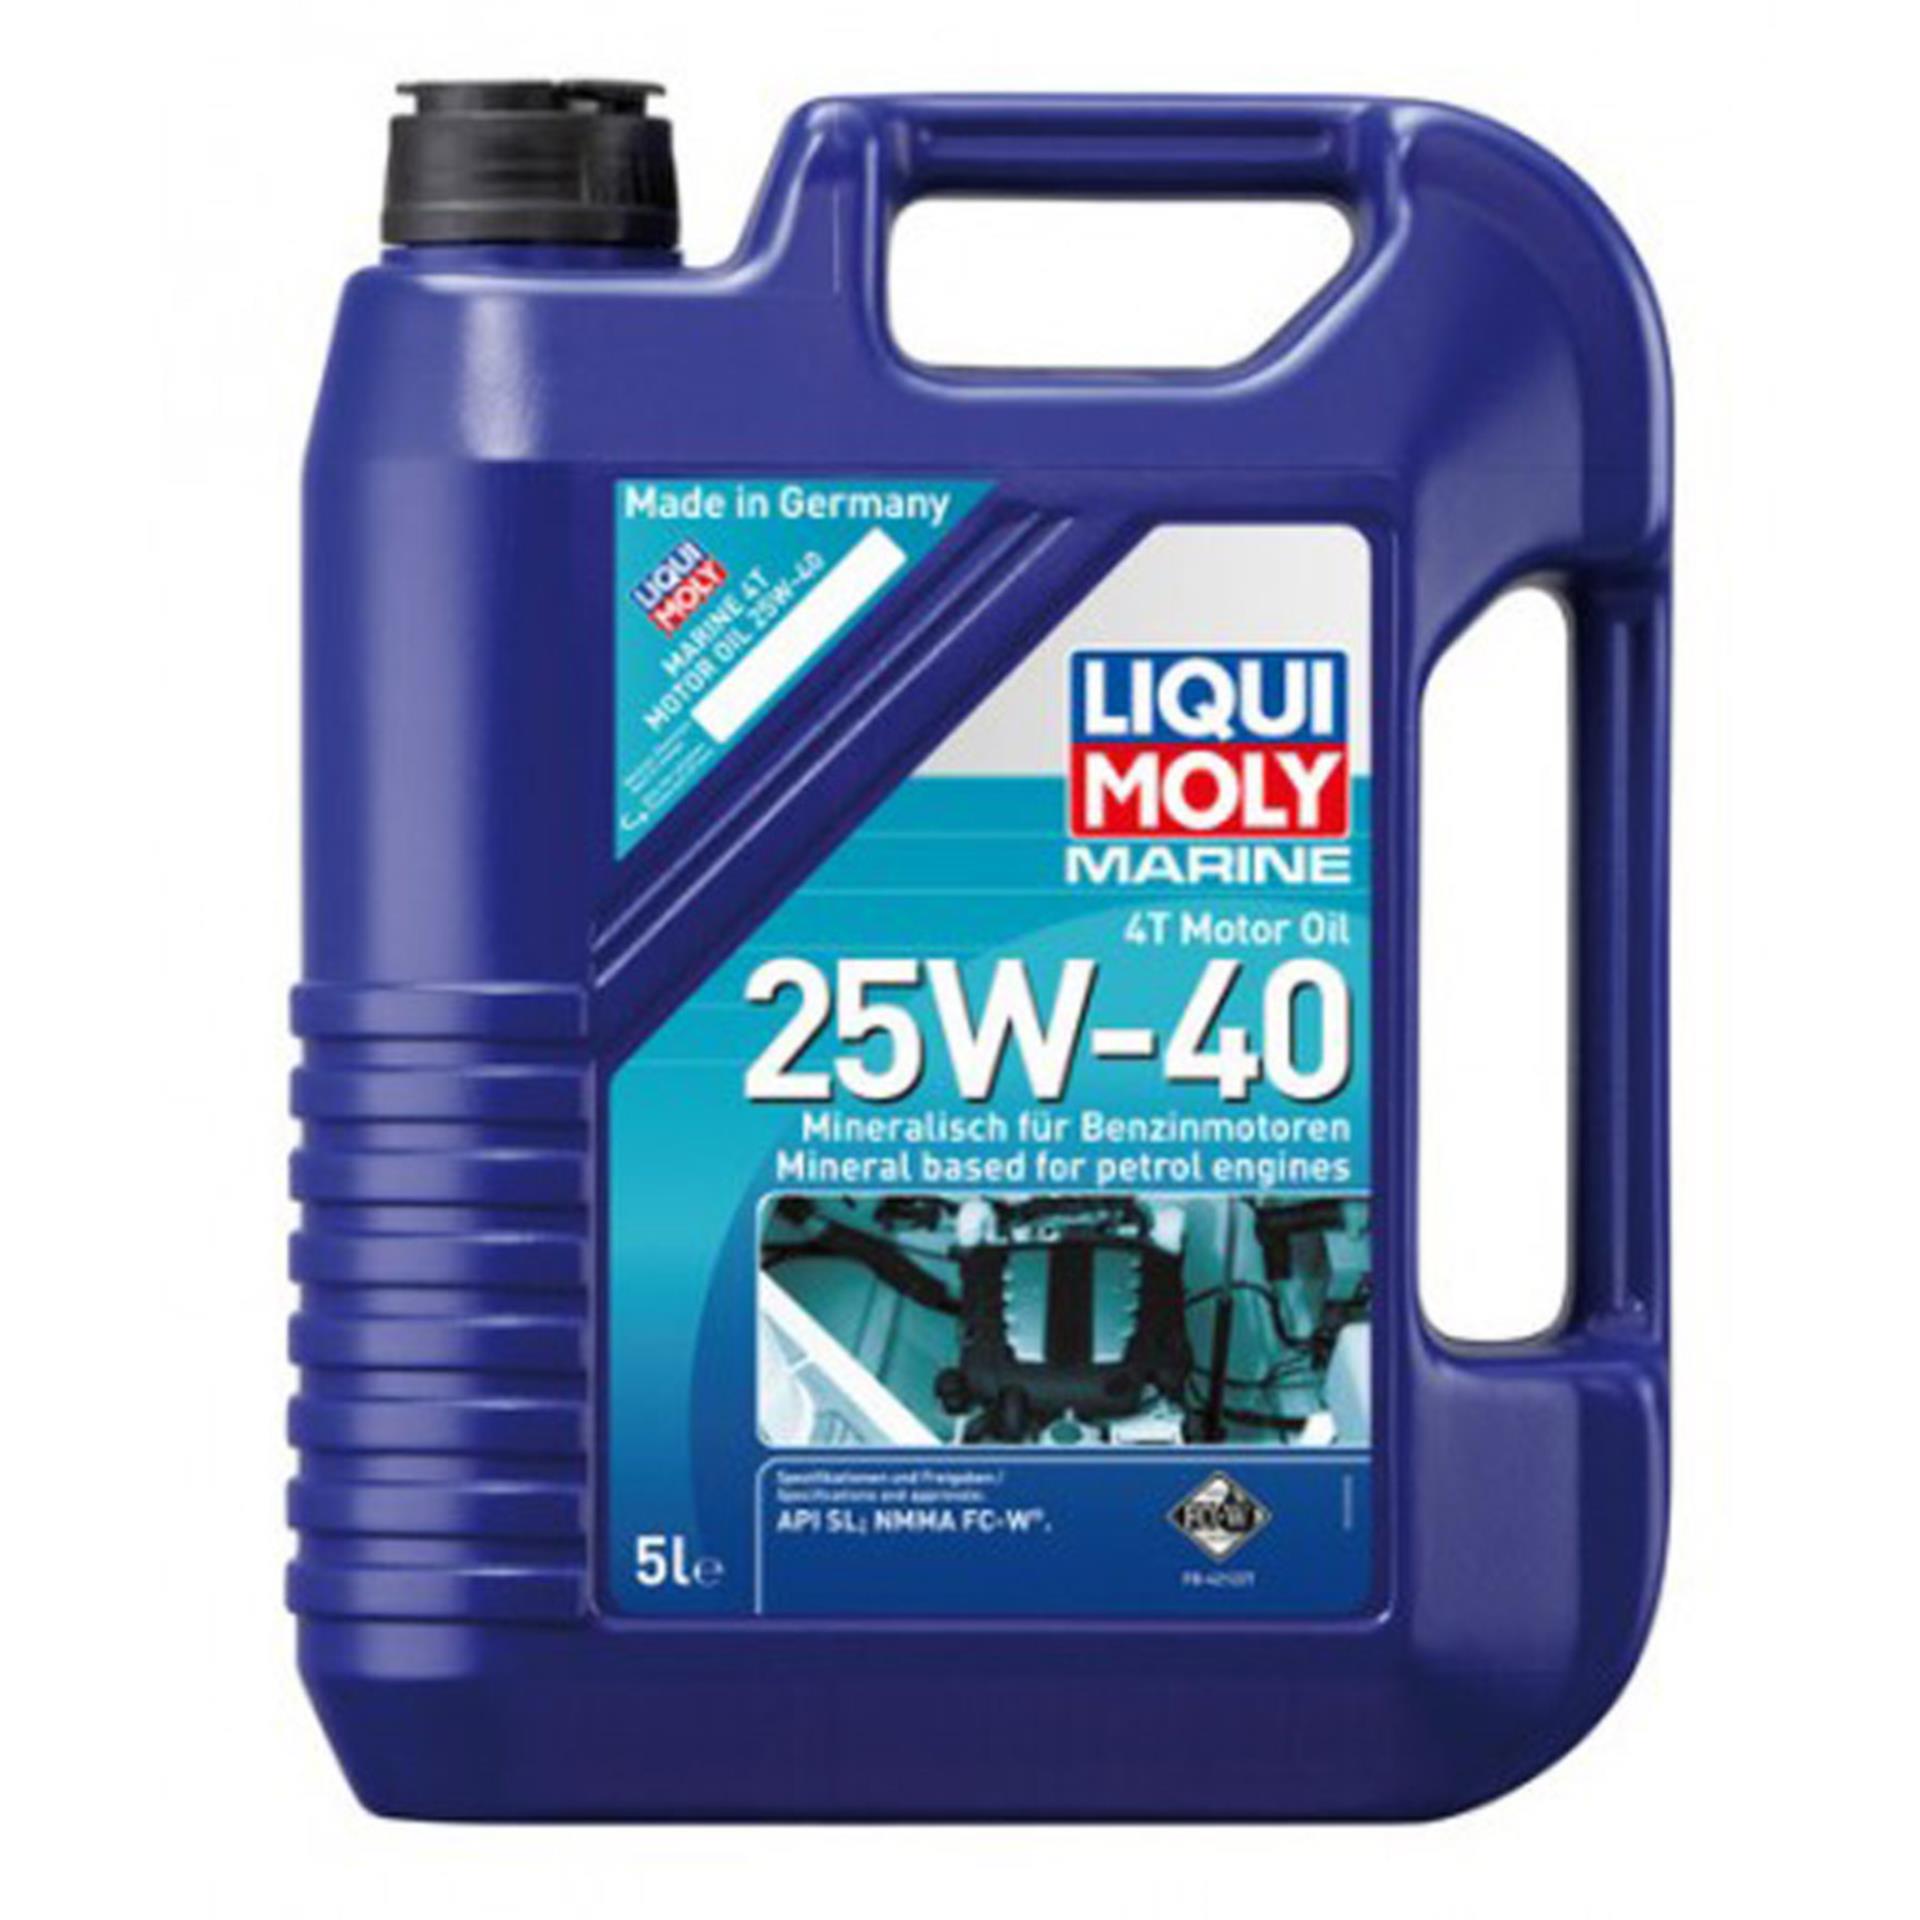 Liqui Moly 4T Motor Oil 25W-40, 5 Liter